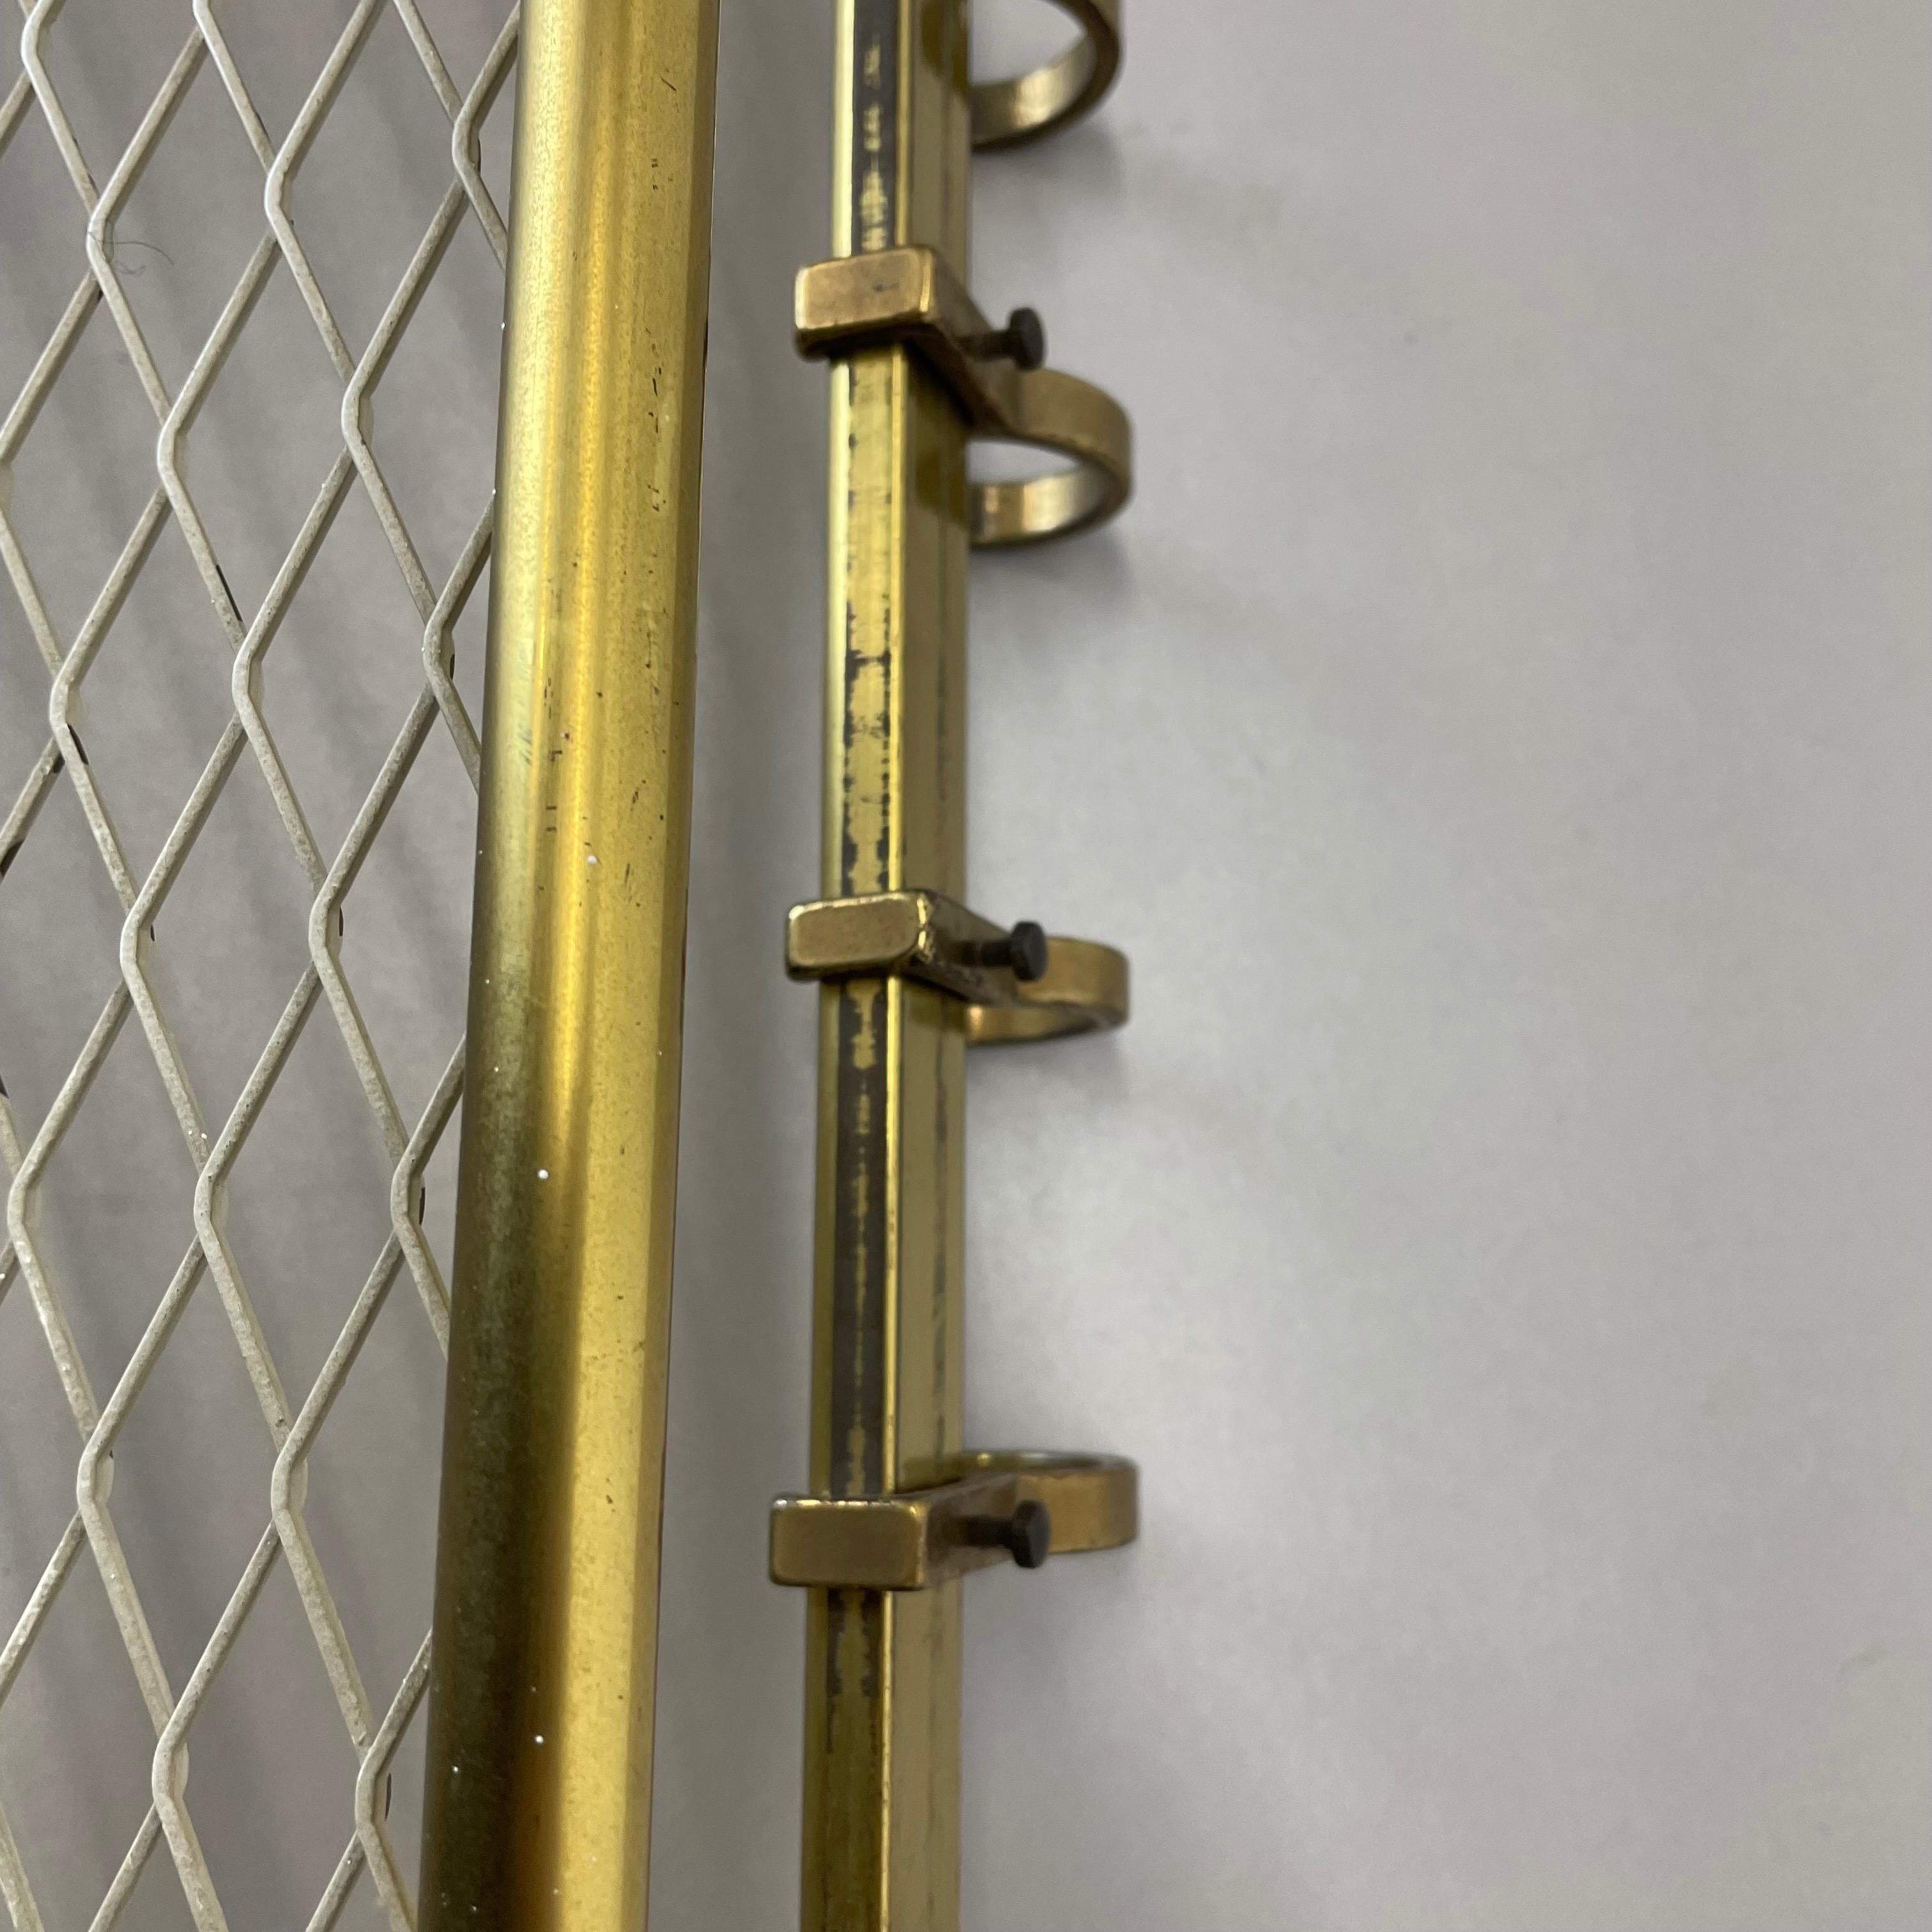 Modernist Mategot Style Brass Wardrobe Hook Coat Rack Element, France 1950s For Sale 2